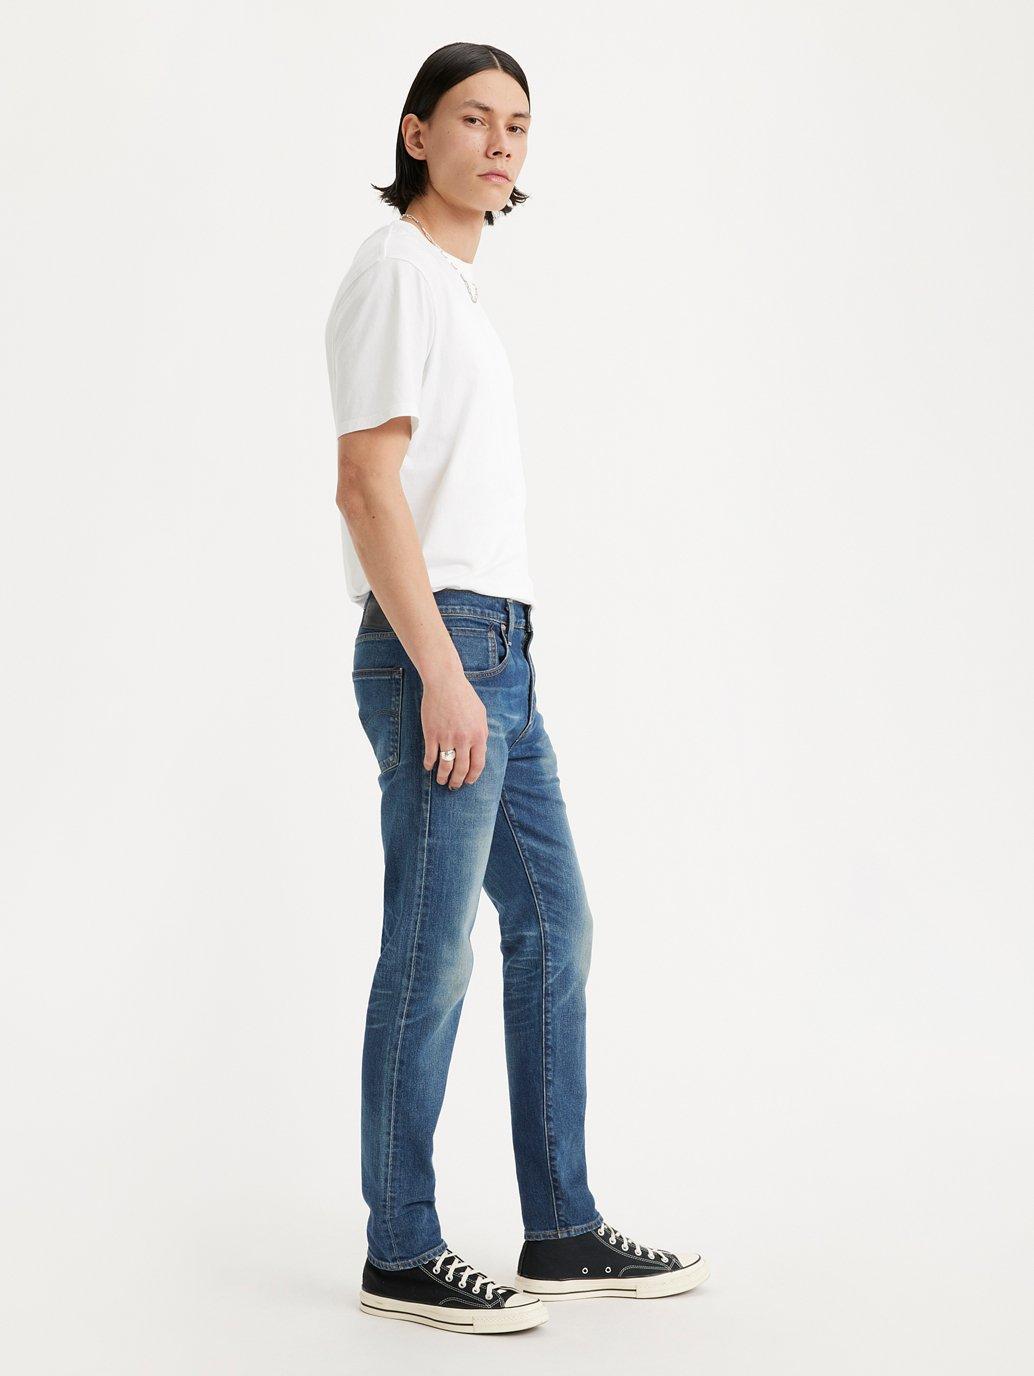 Buy Levi's® Men's Made in Japan 512™ Jeans | Levi’s® Official Online ...